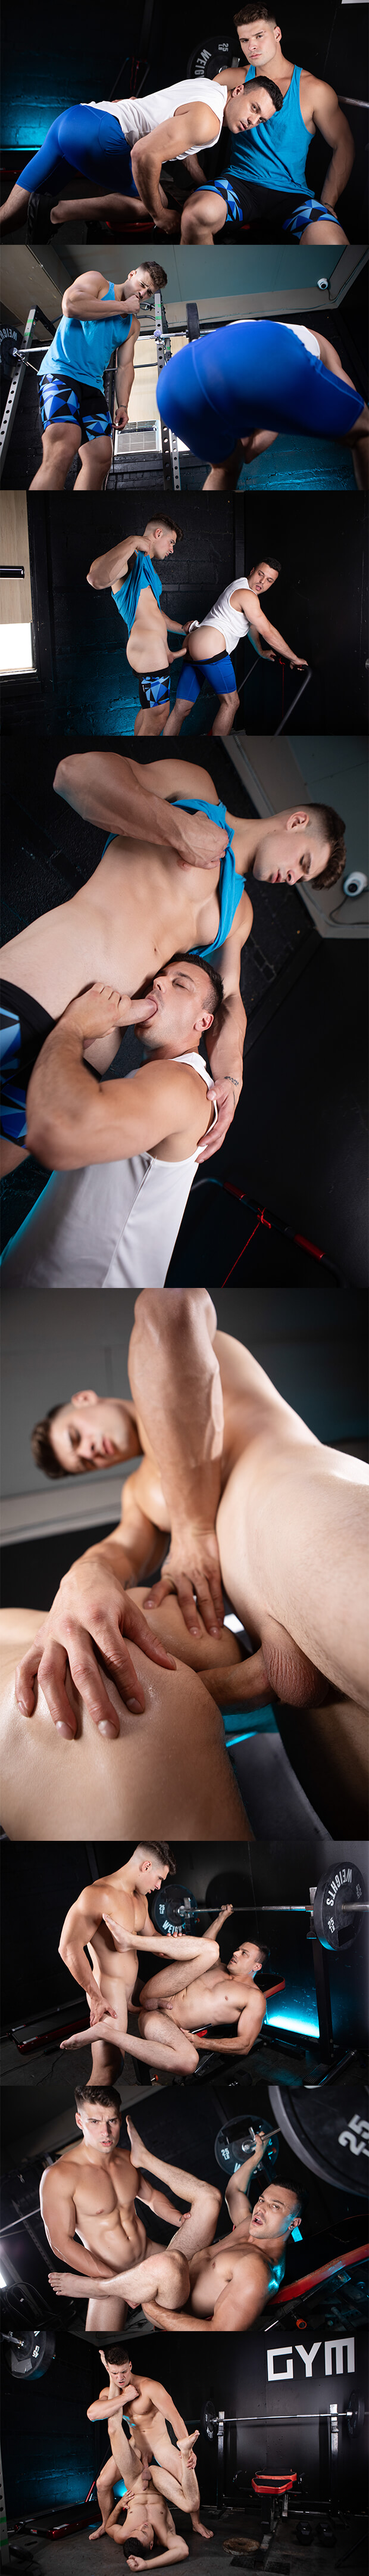 Men.com | Gym Powerfuck (Malik Delgaty & Nate Rose)